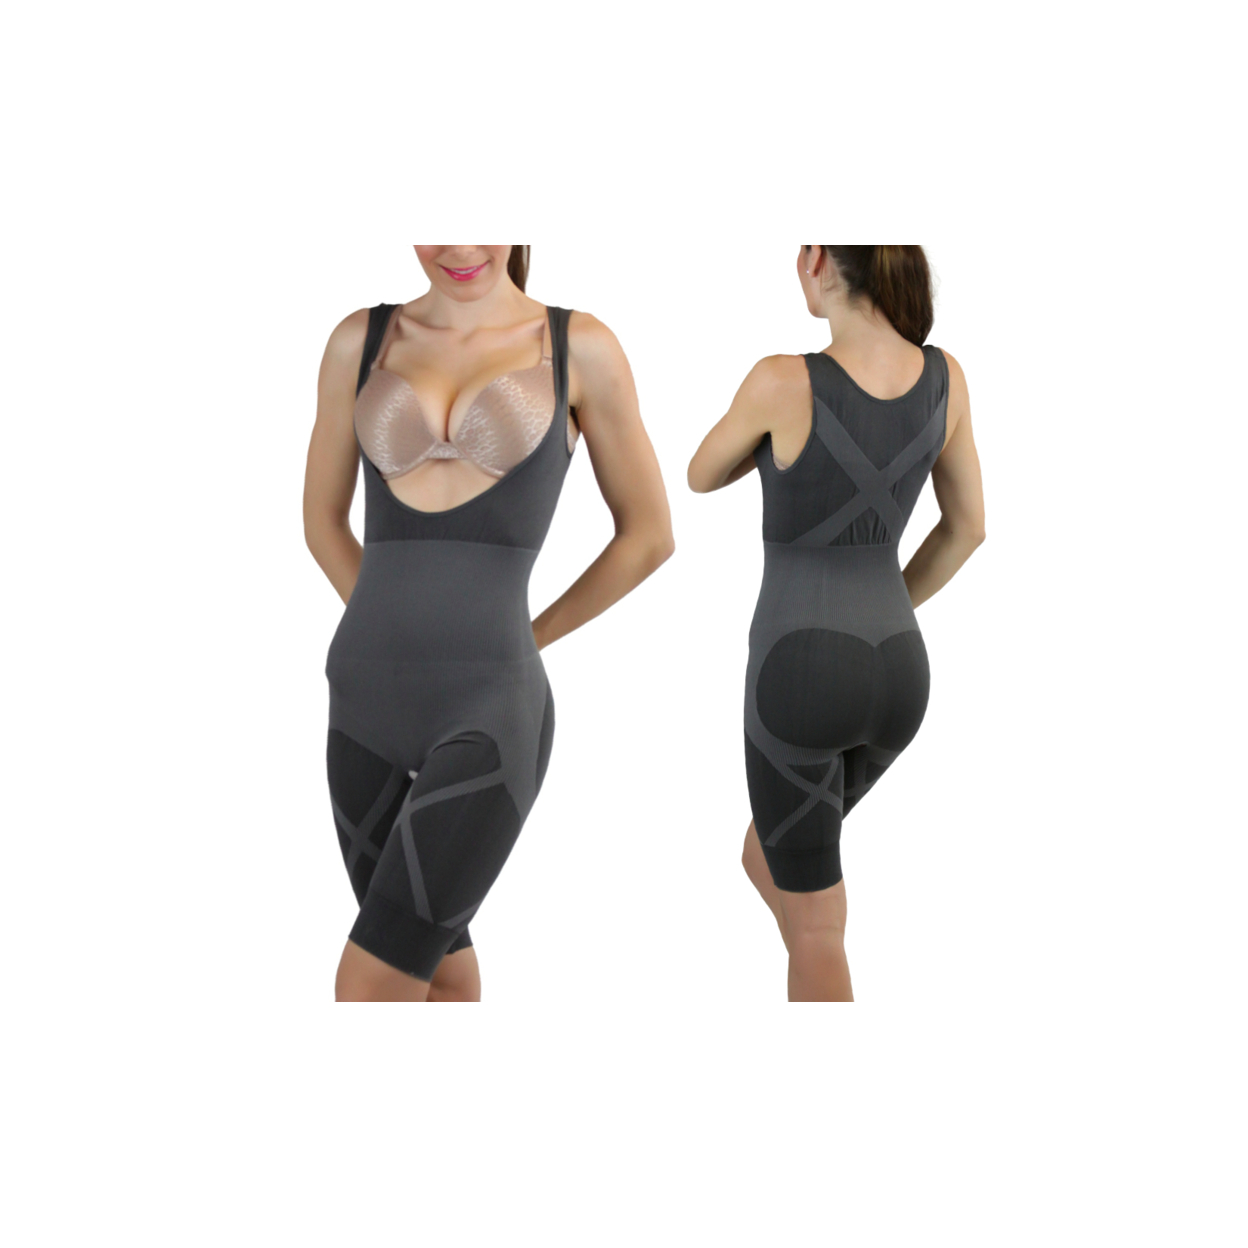 Women's Bamboo Slimming Body Suit Shaper - Gray, 2X